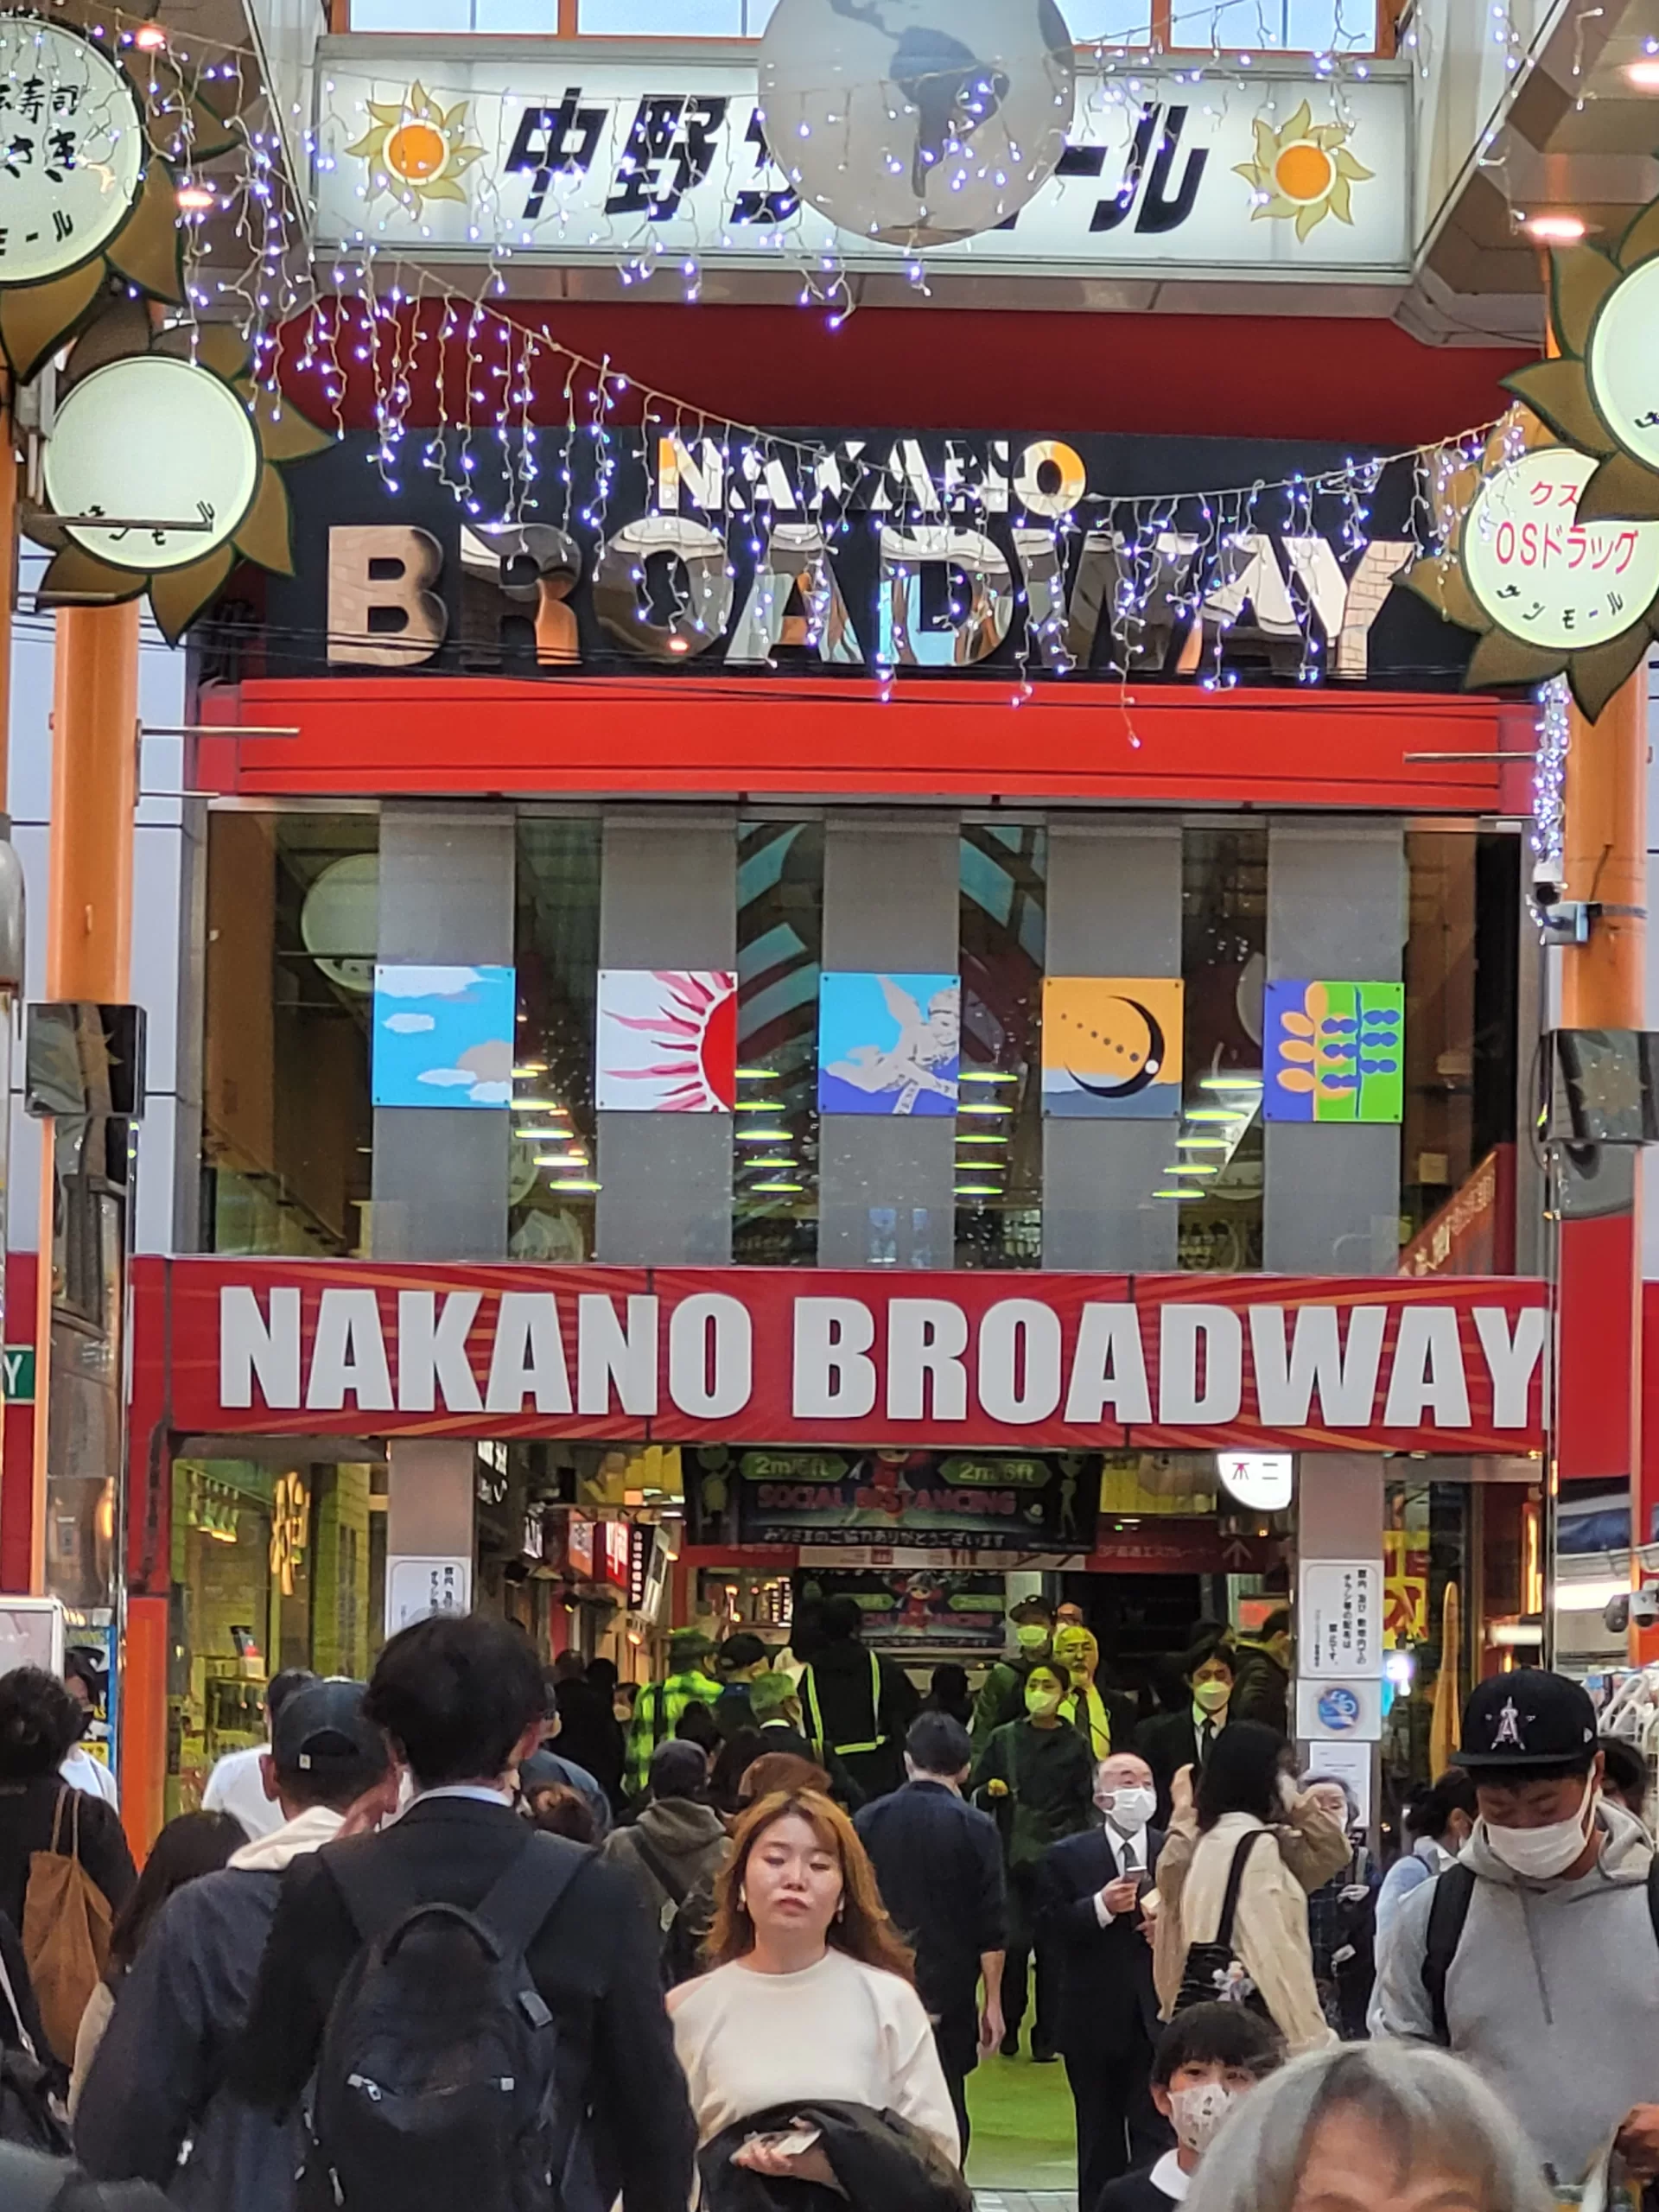 Nakano Broadway offers anime fans an alternative to Akihabara